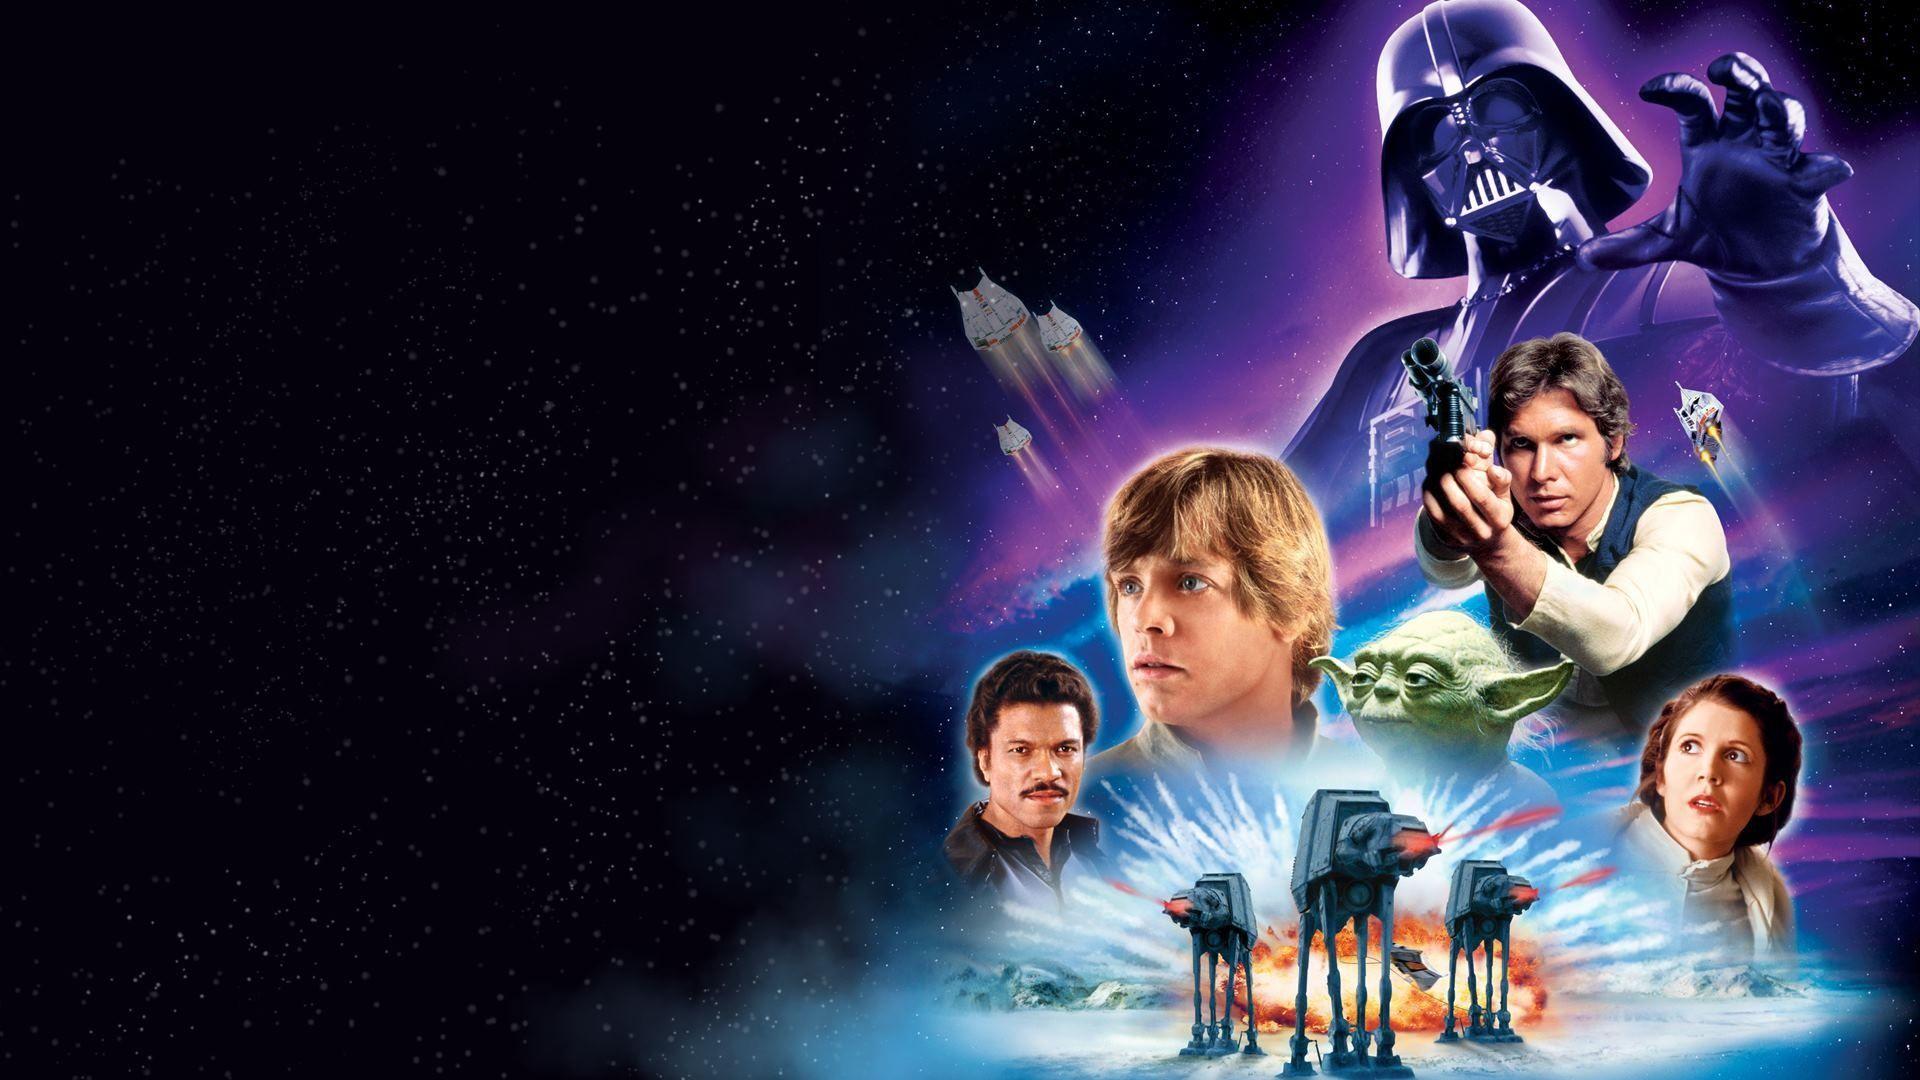 HD Star Wars Episode V Wallpaper Post has been published